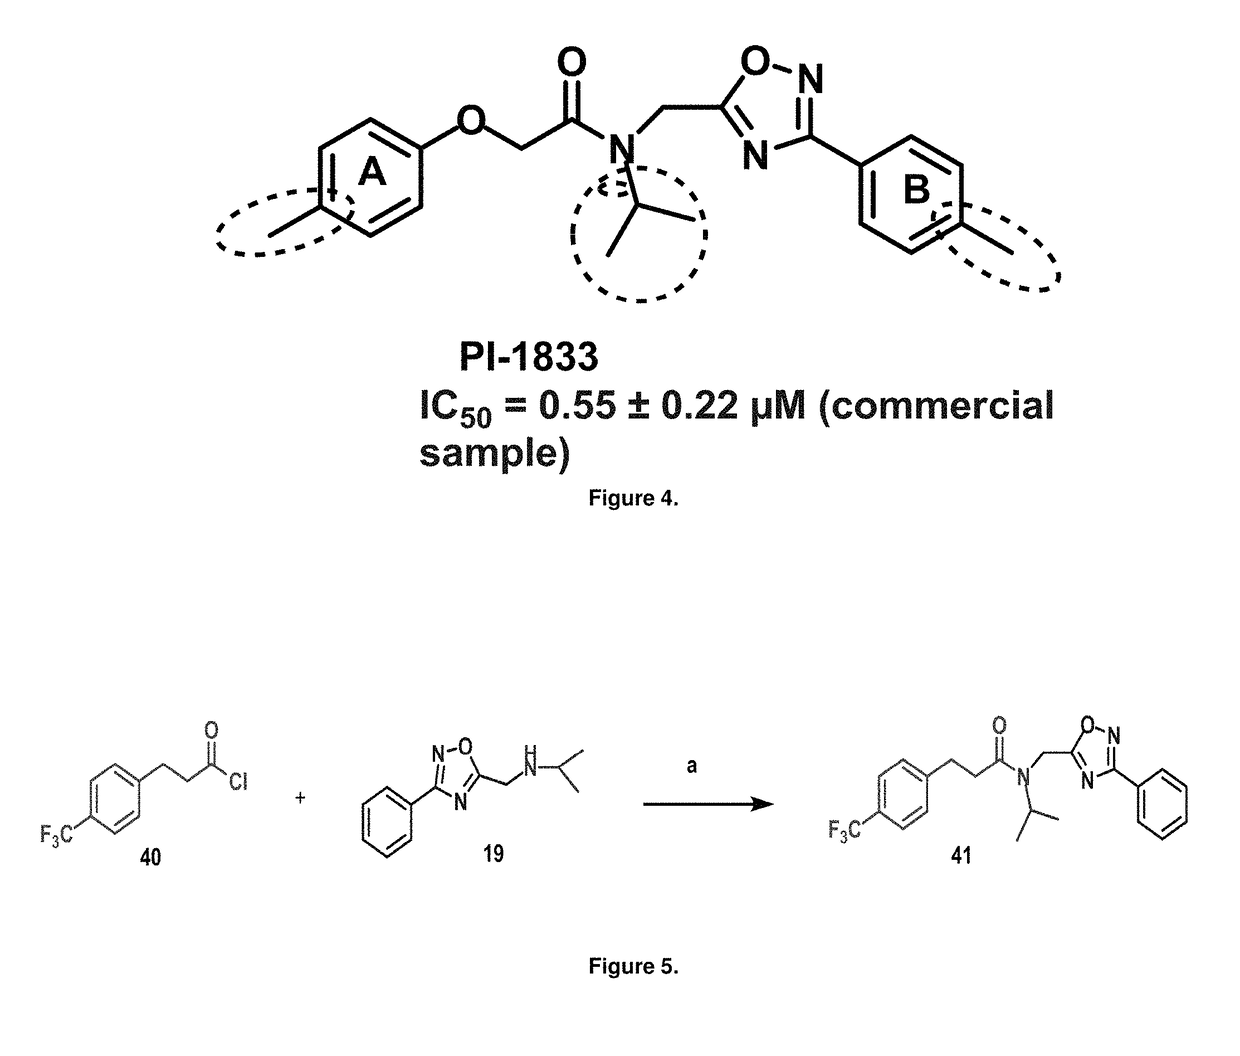 Proteasome chymotrypsin-like inhibition using PI-1833 analogs